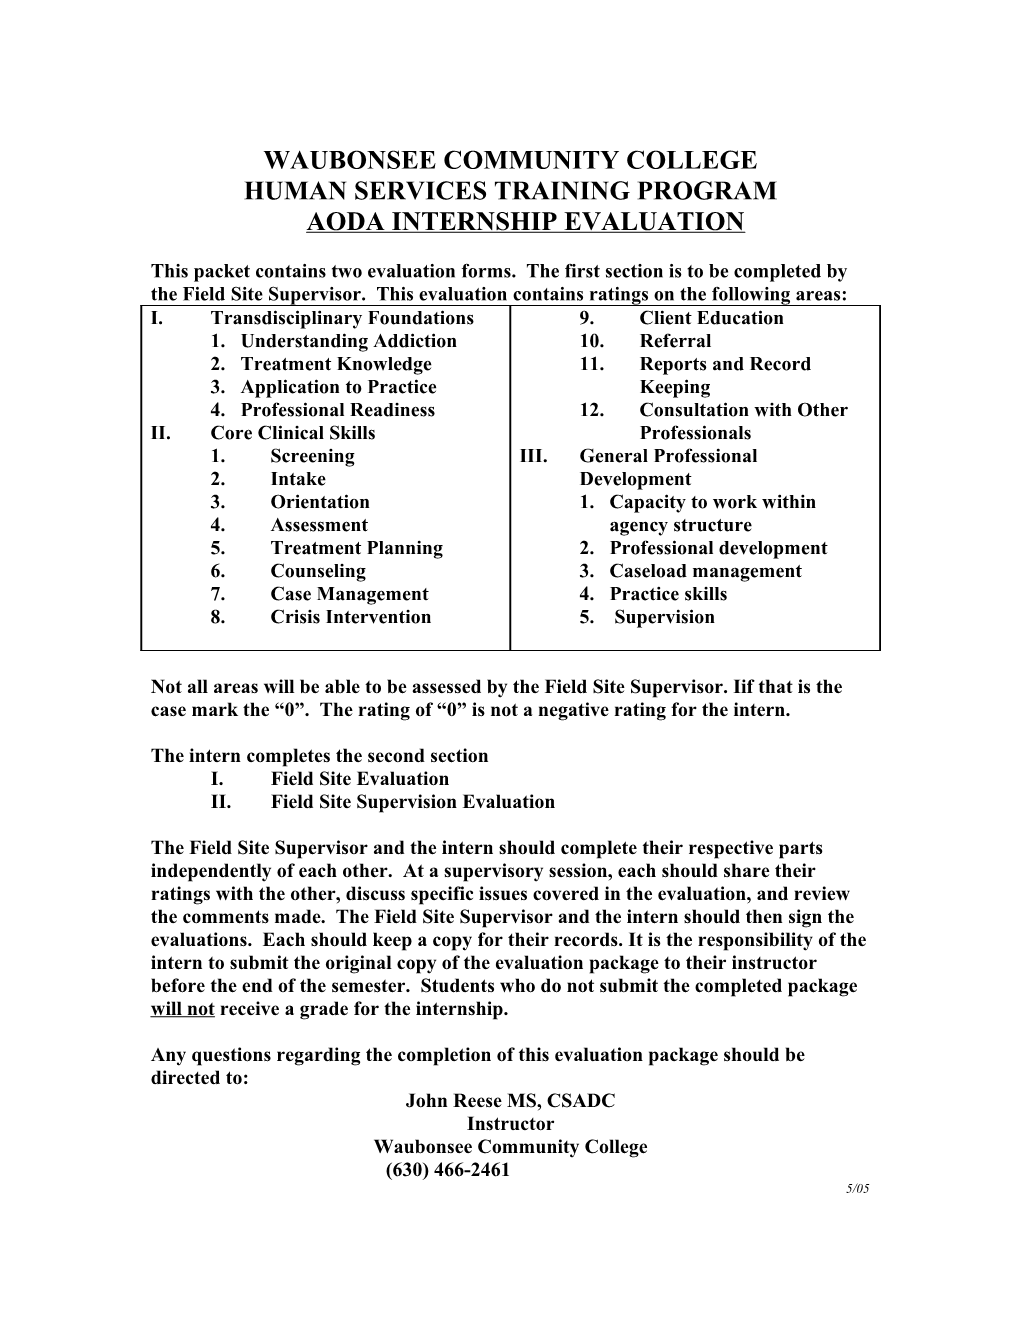 Human Services Training Program